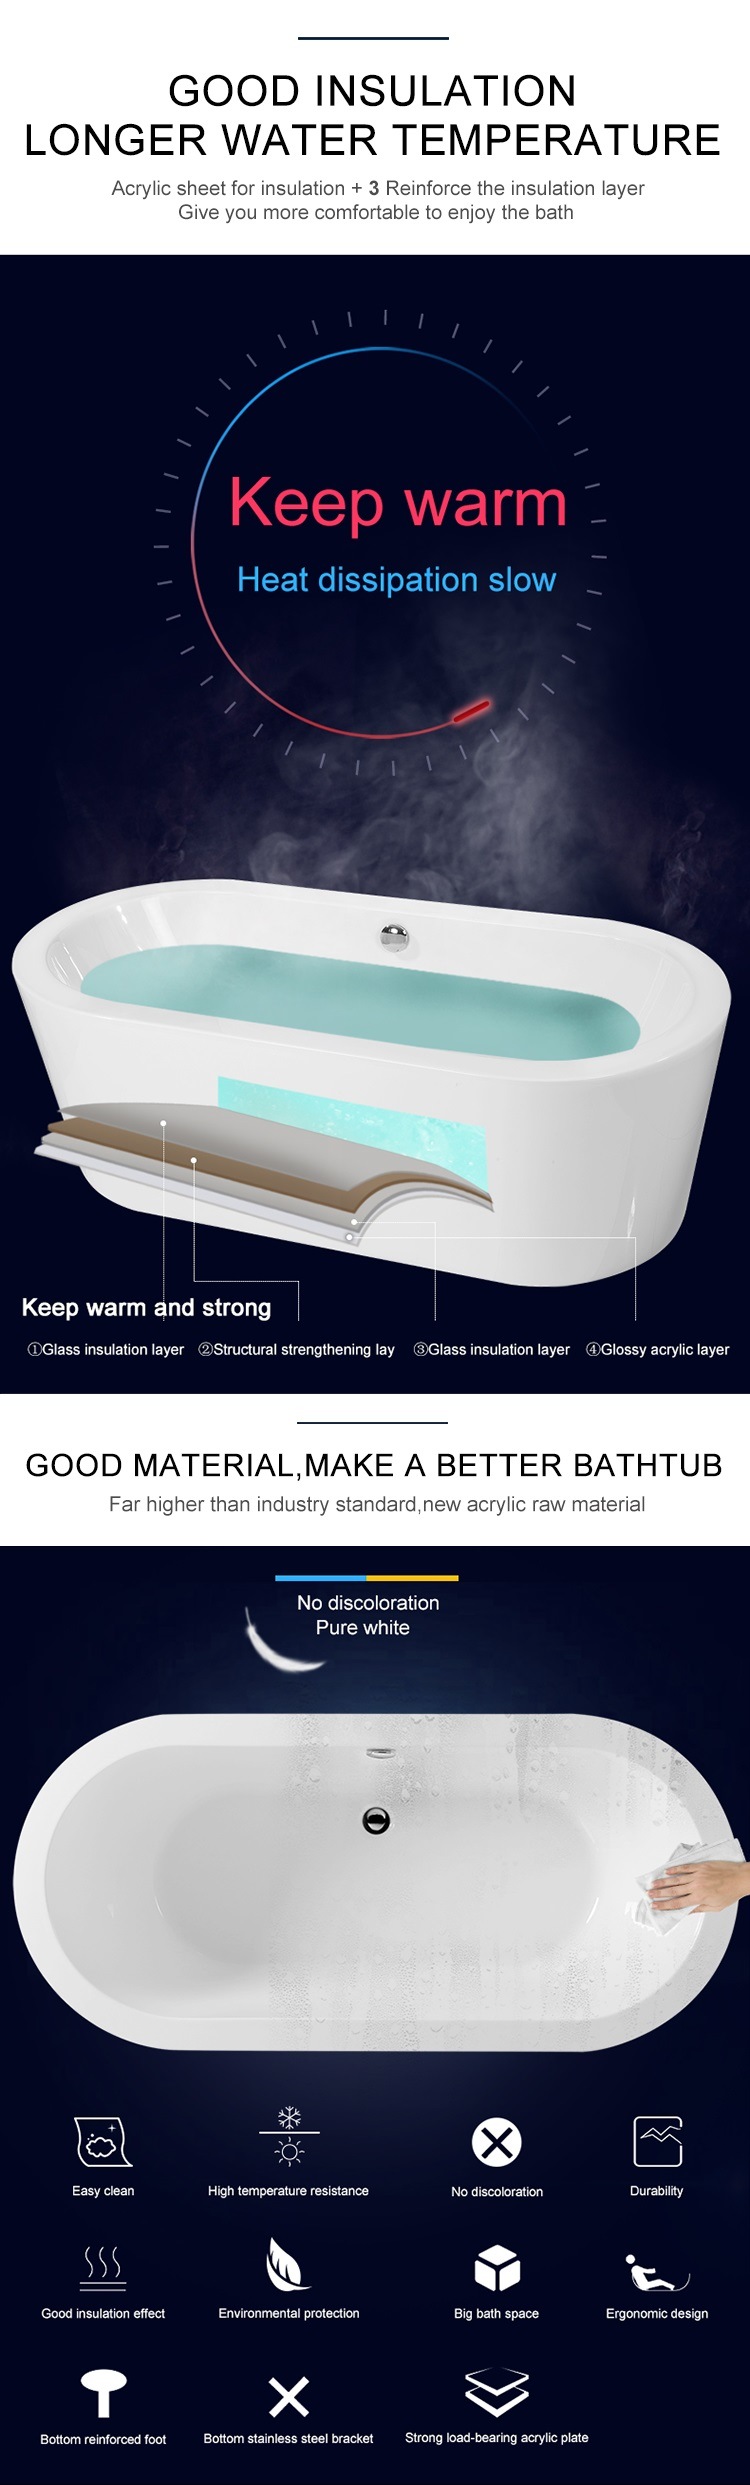 Cupc Imapo Certified Acrylic Soaker Soaking Bathtub